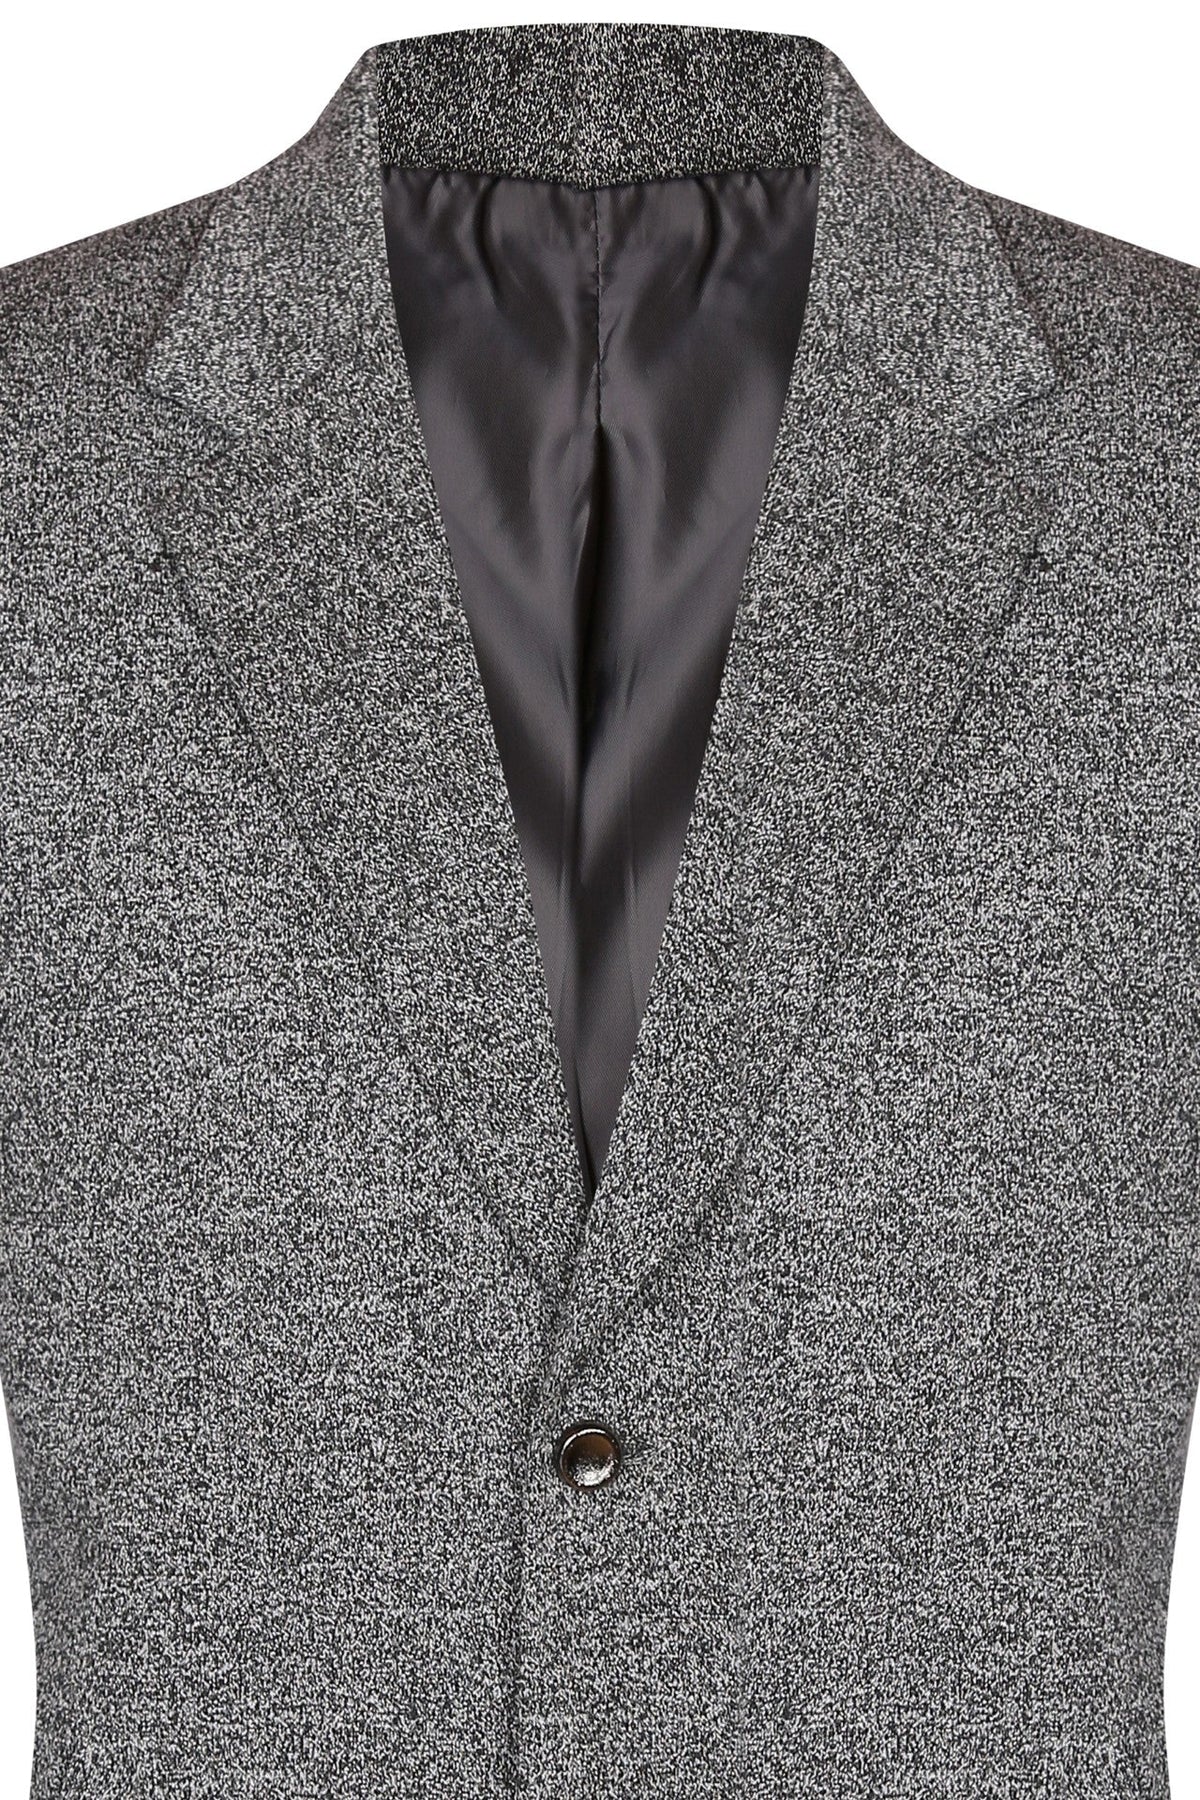 Grey notch collar jacket